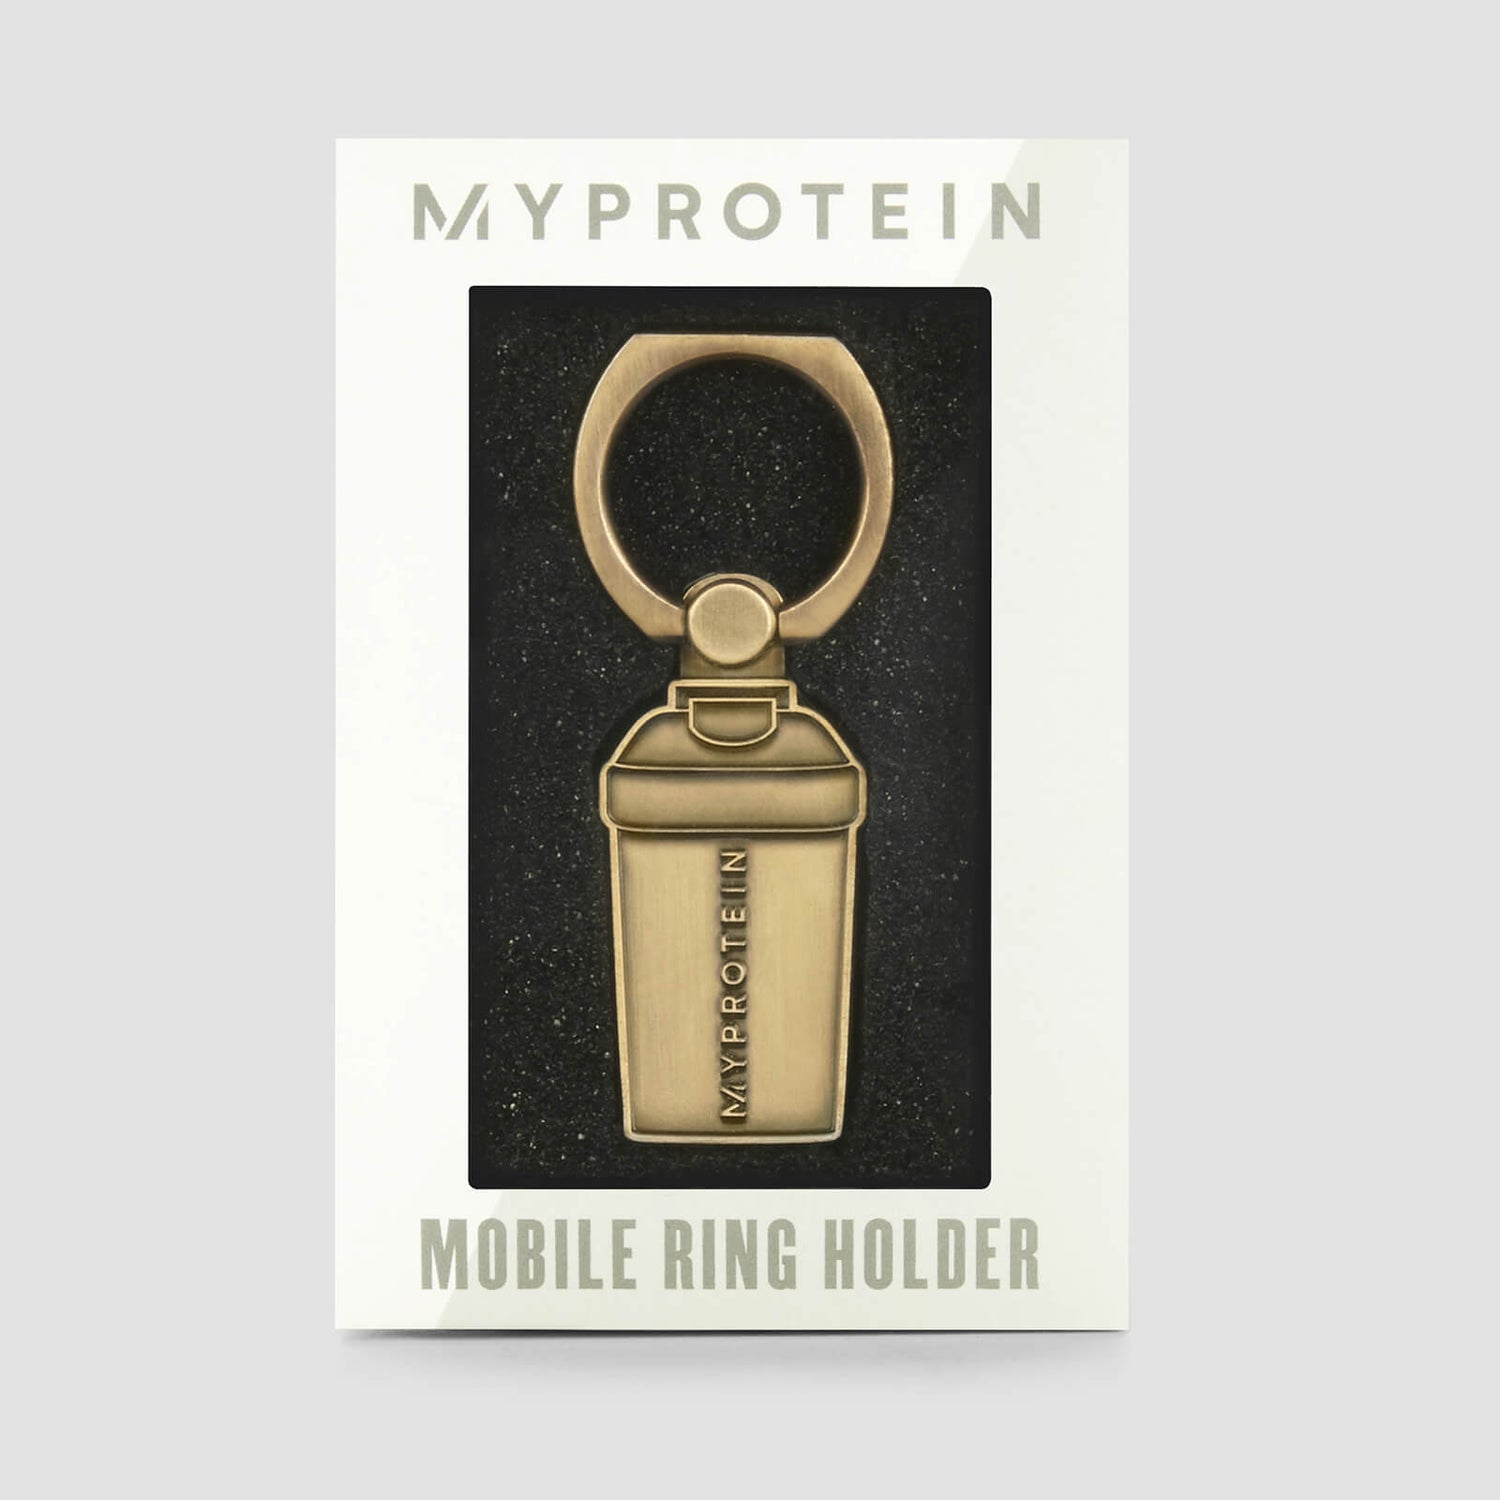 Myprotein 限量版手机环 - 质感铜